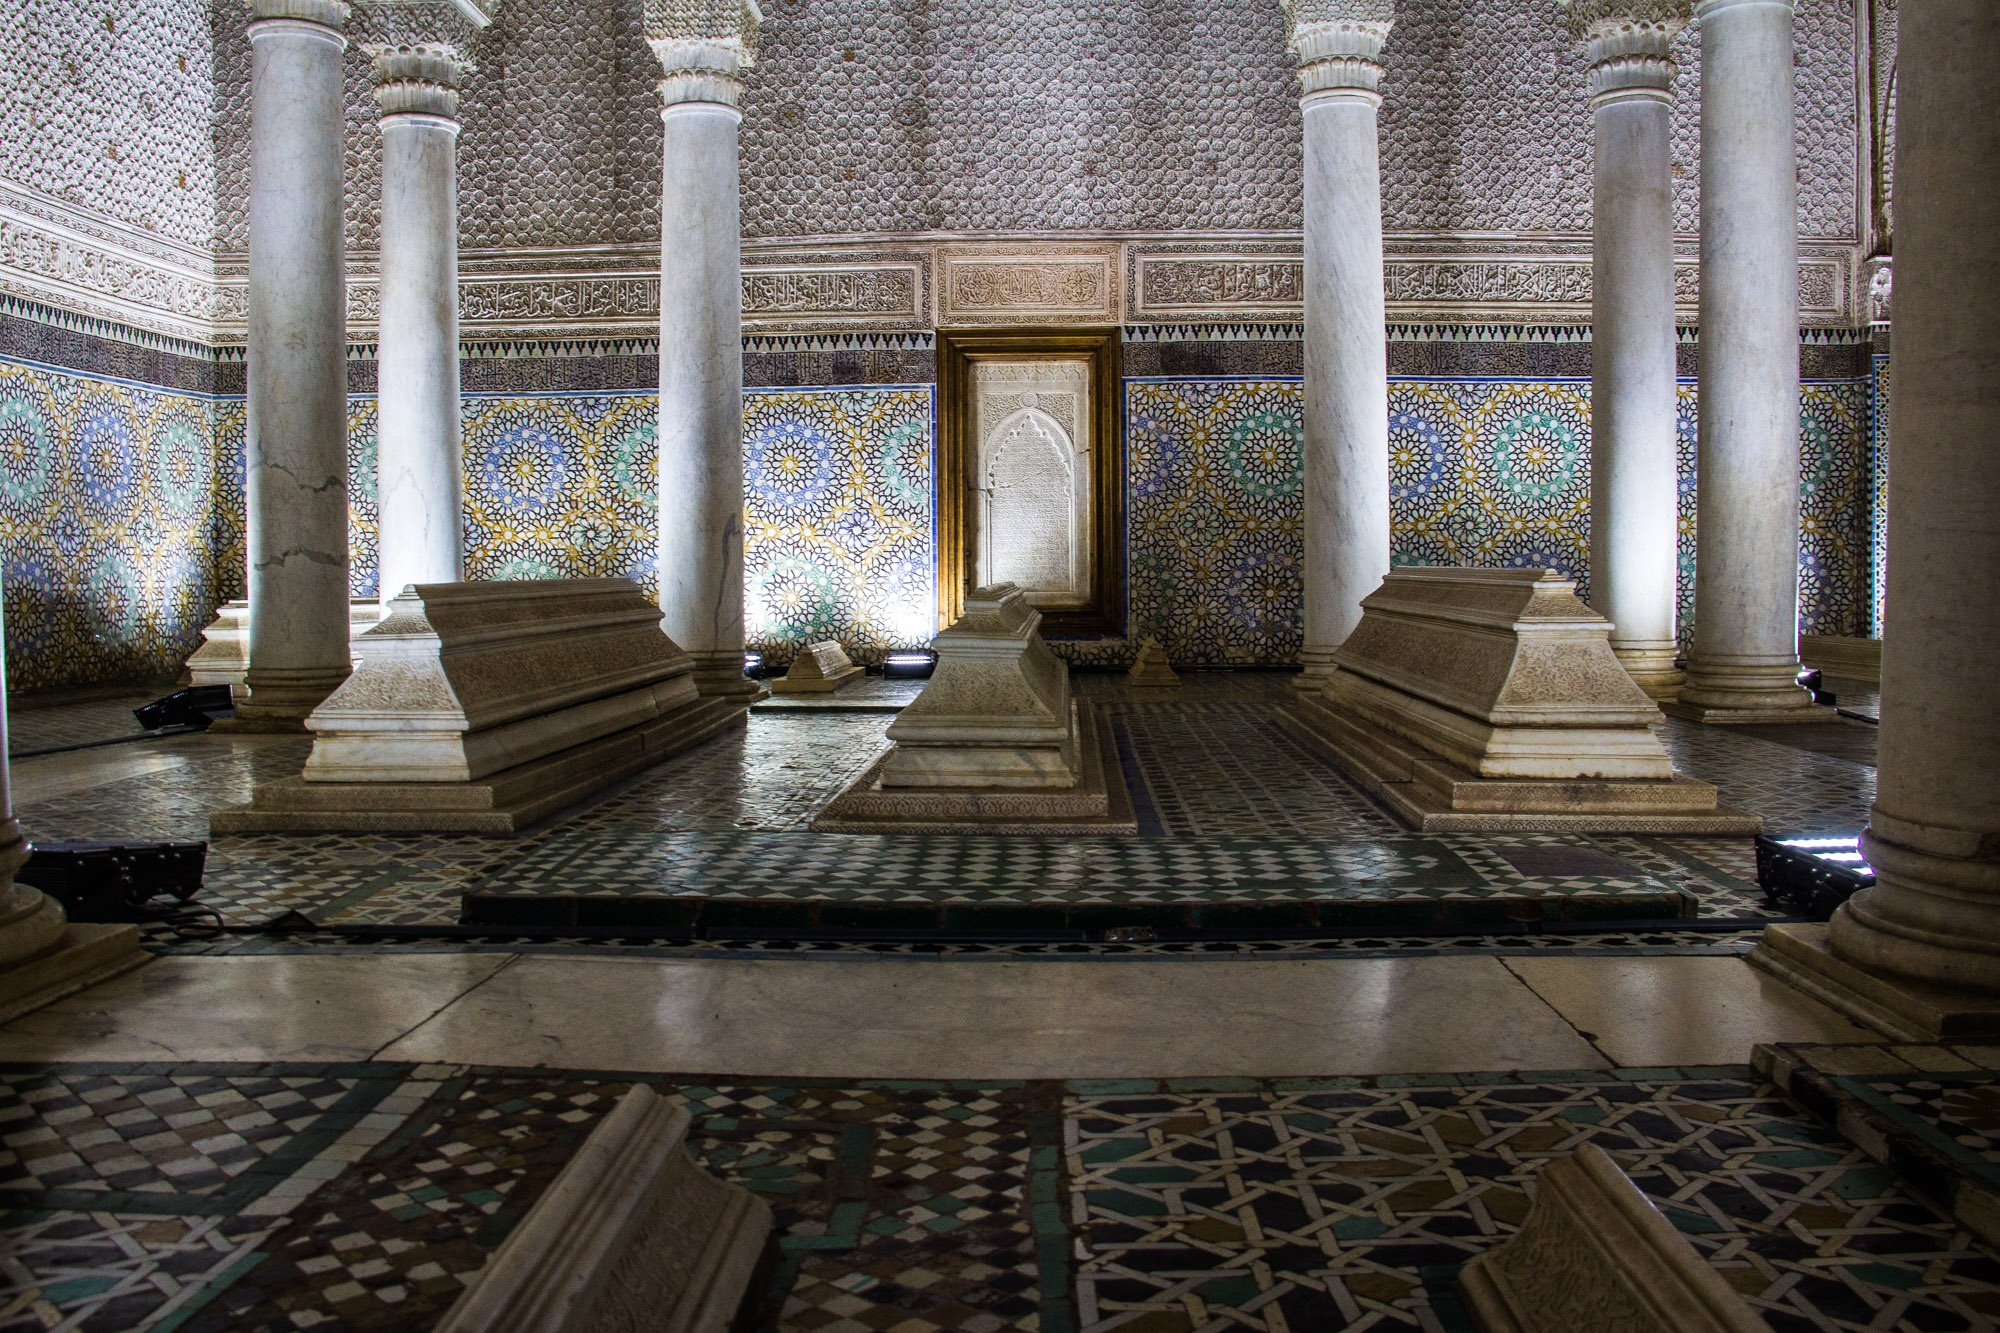 The Saadian Tombs